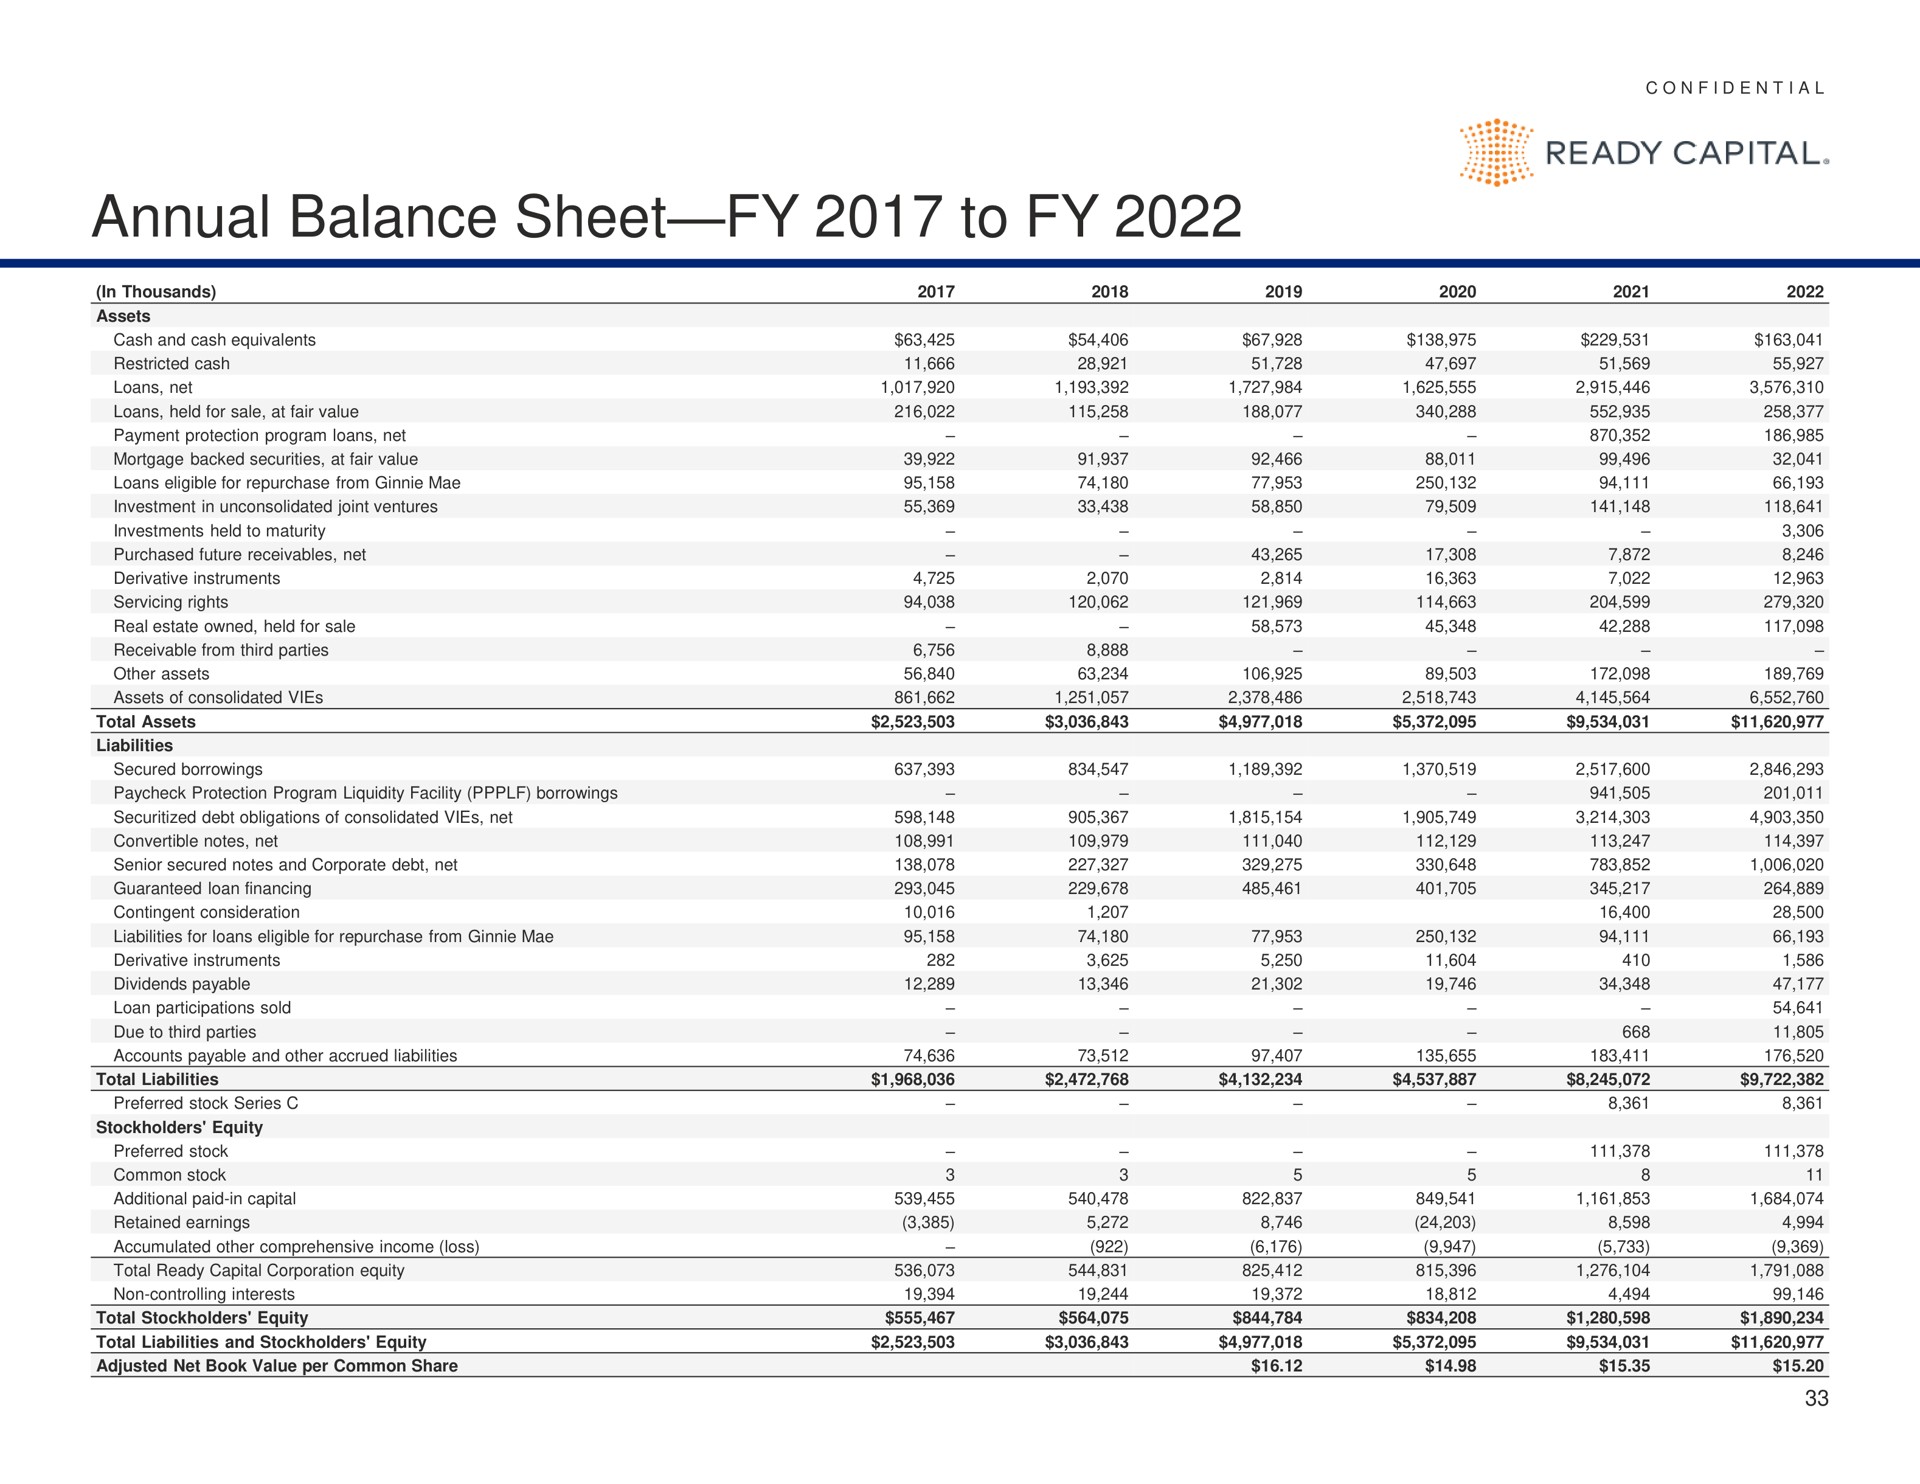 annual balance sheet to ready capital | Ready Capital